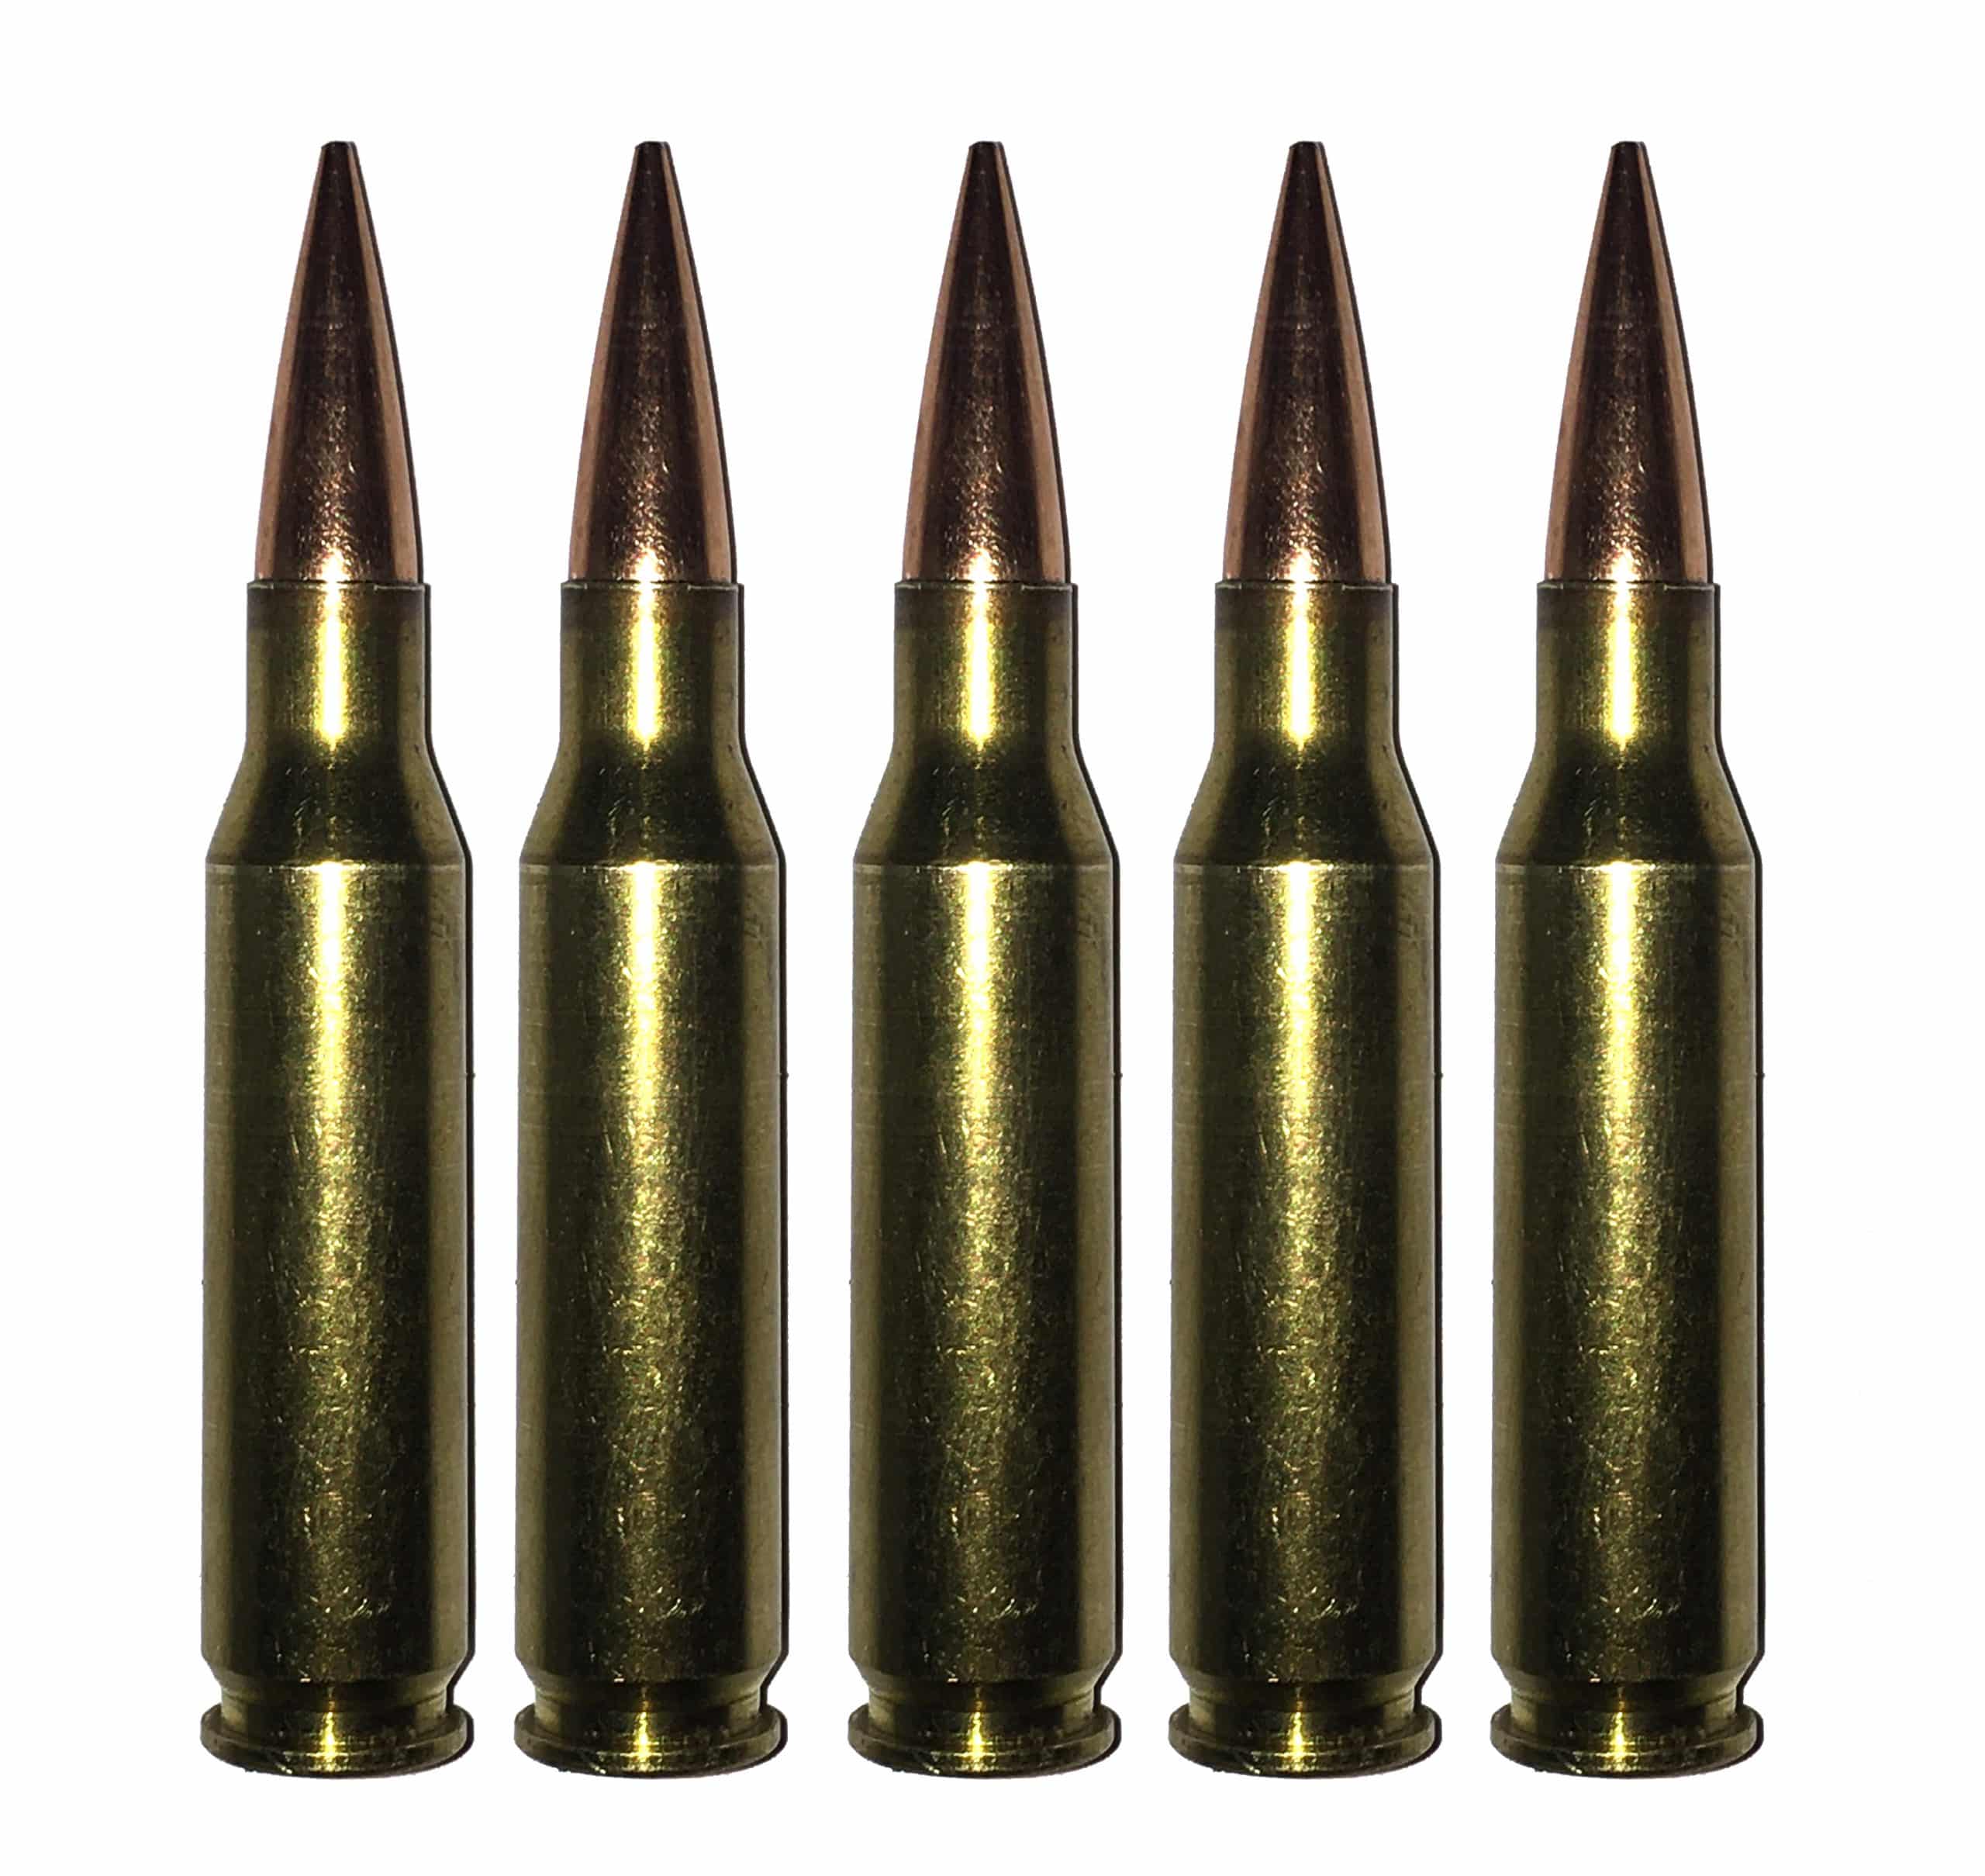 7mm-08 Remington Dummy Rounds Snap Caps Fake Bullets J&M Spec INERT